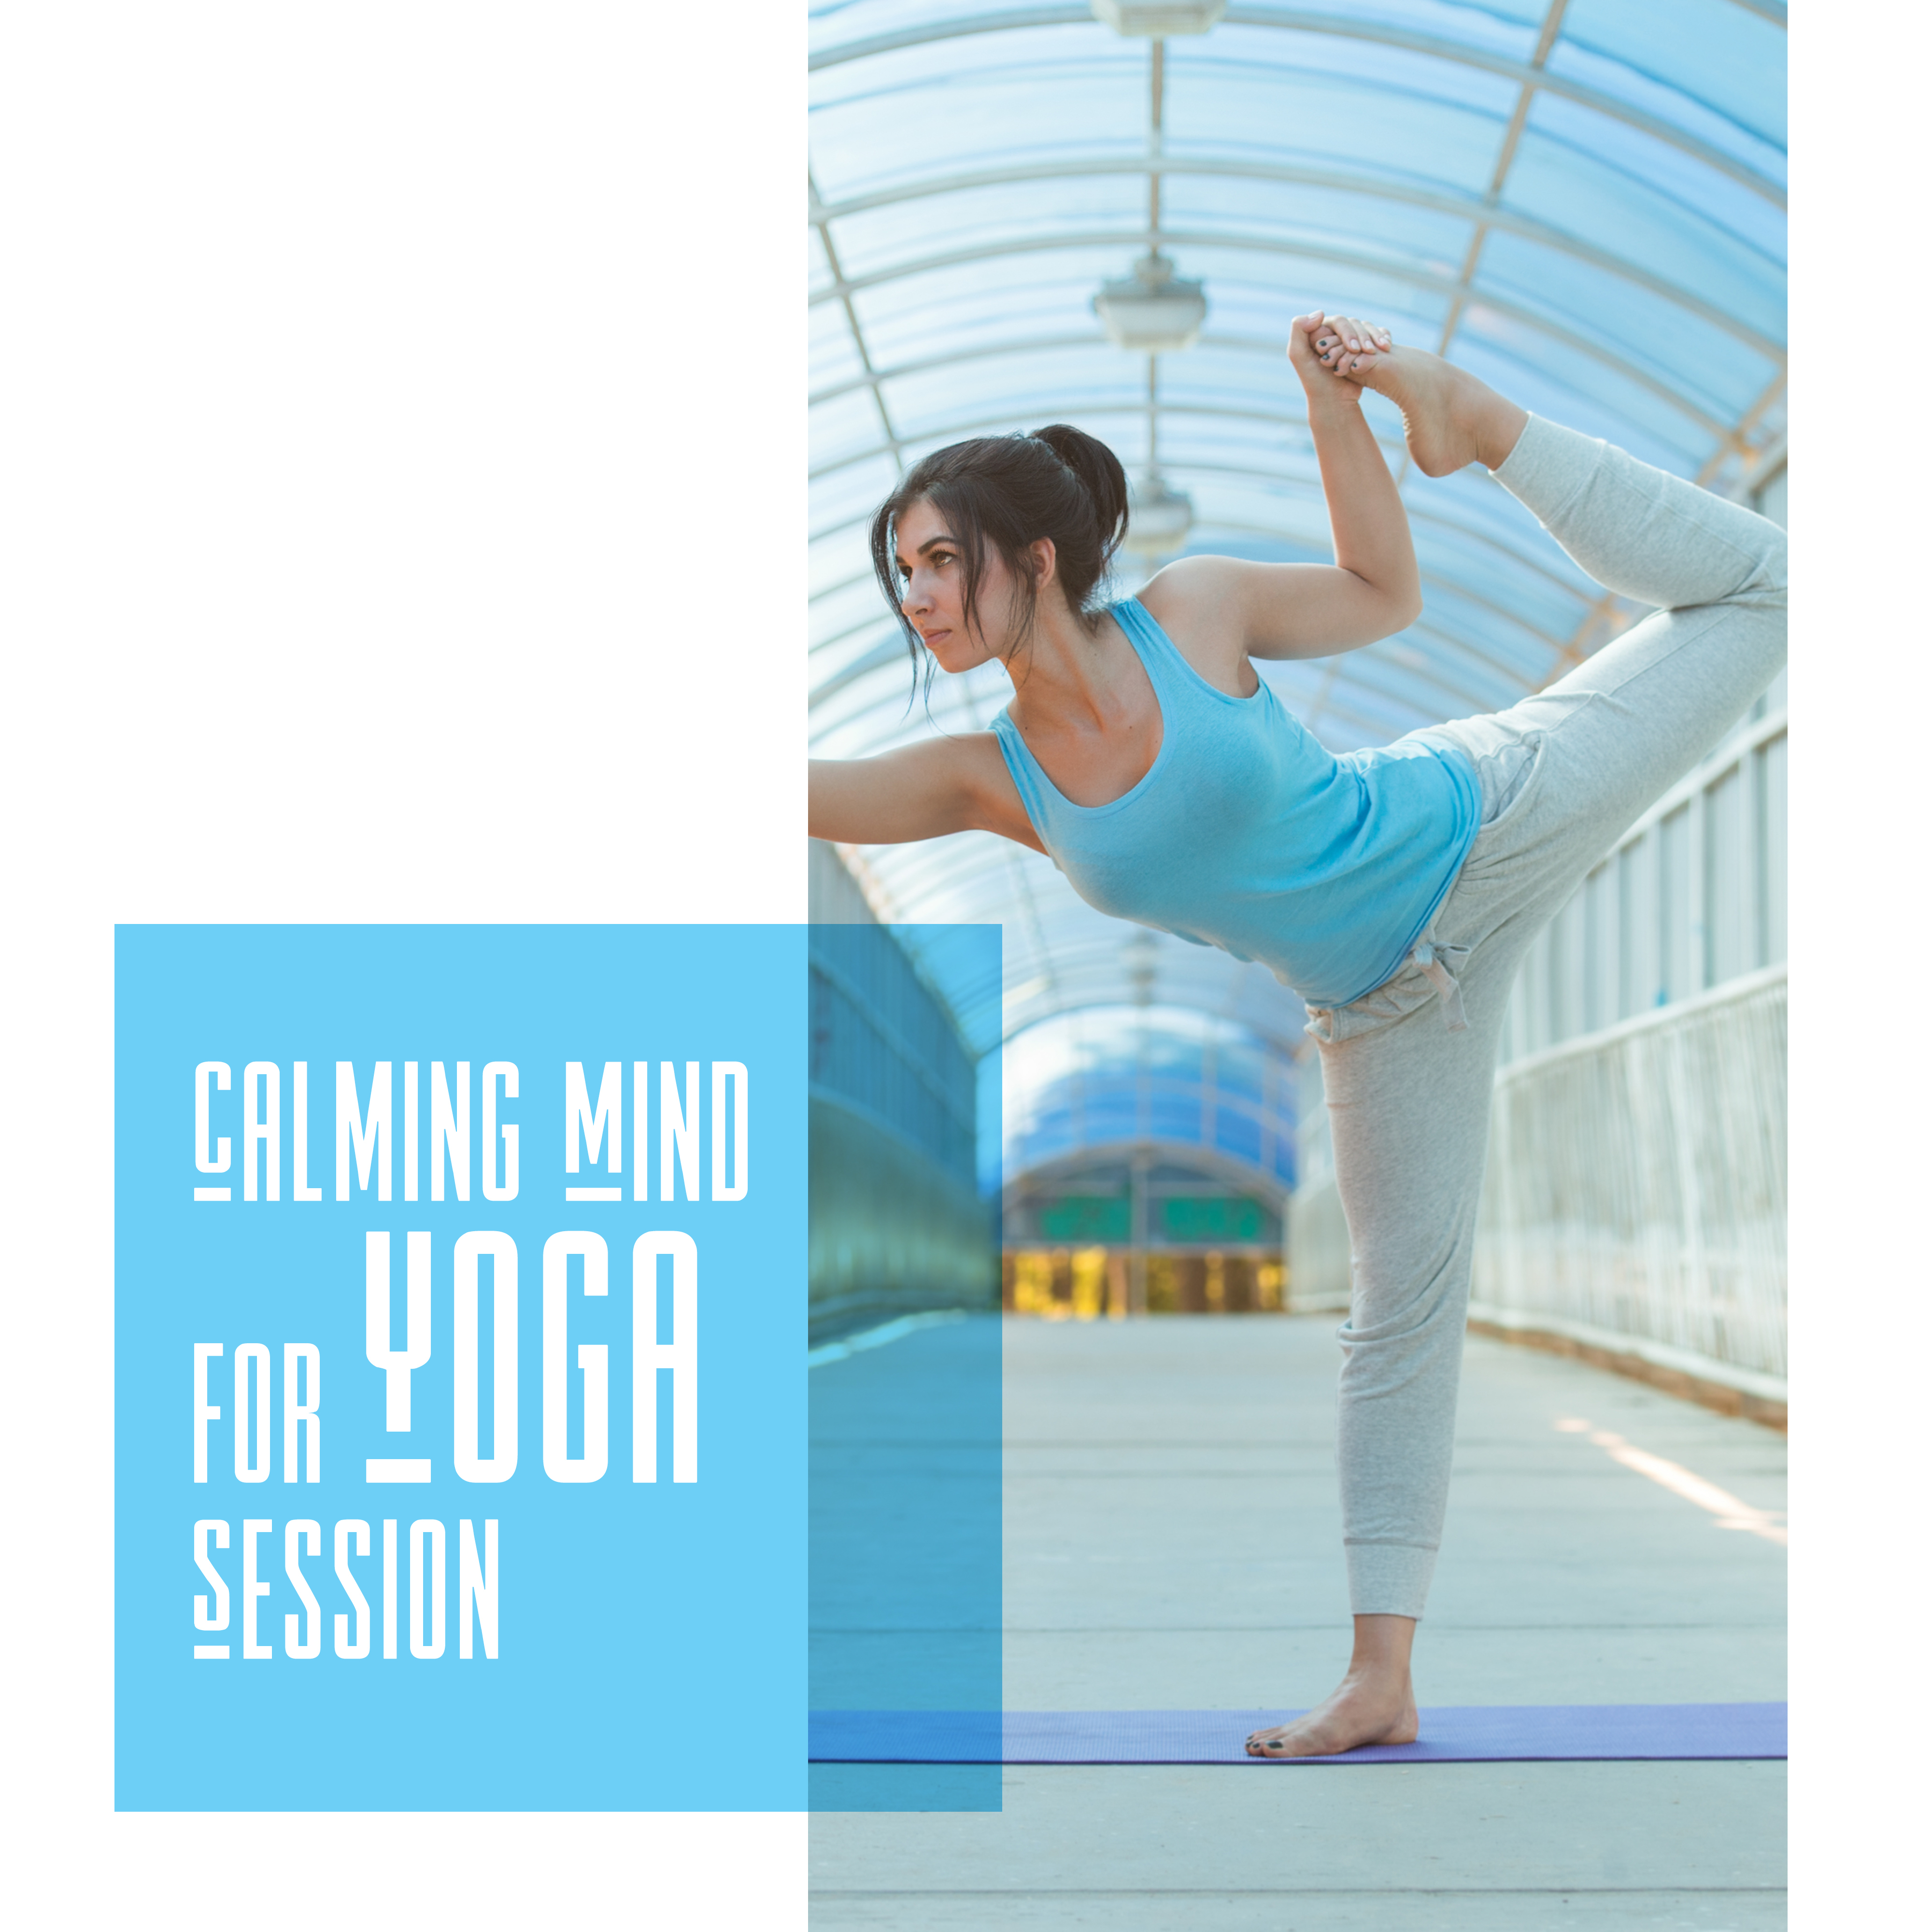 Calming Mind for Yoga Session – Meditation Music Zone, Yoga Bliss, Zen Lounge, Yoga Practice, Deep Meditation for Inner Harmony